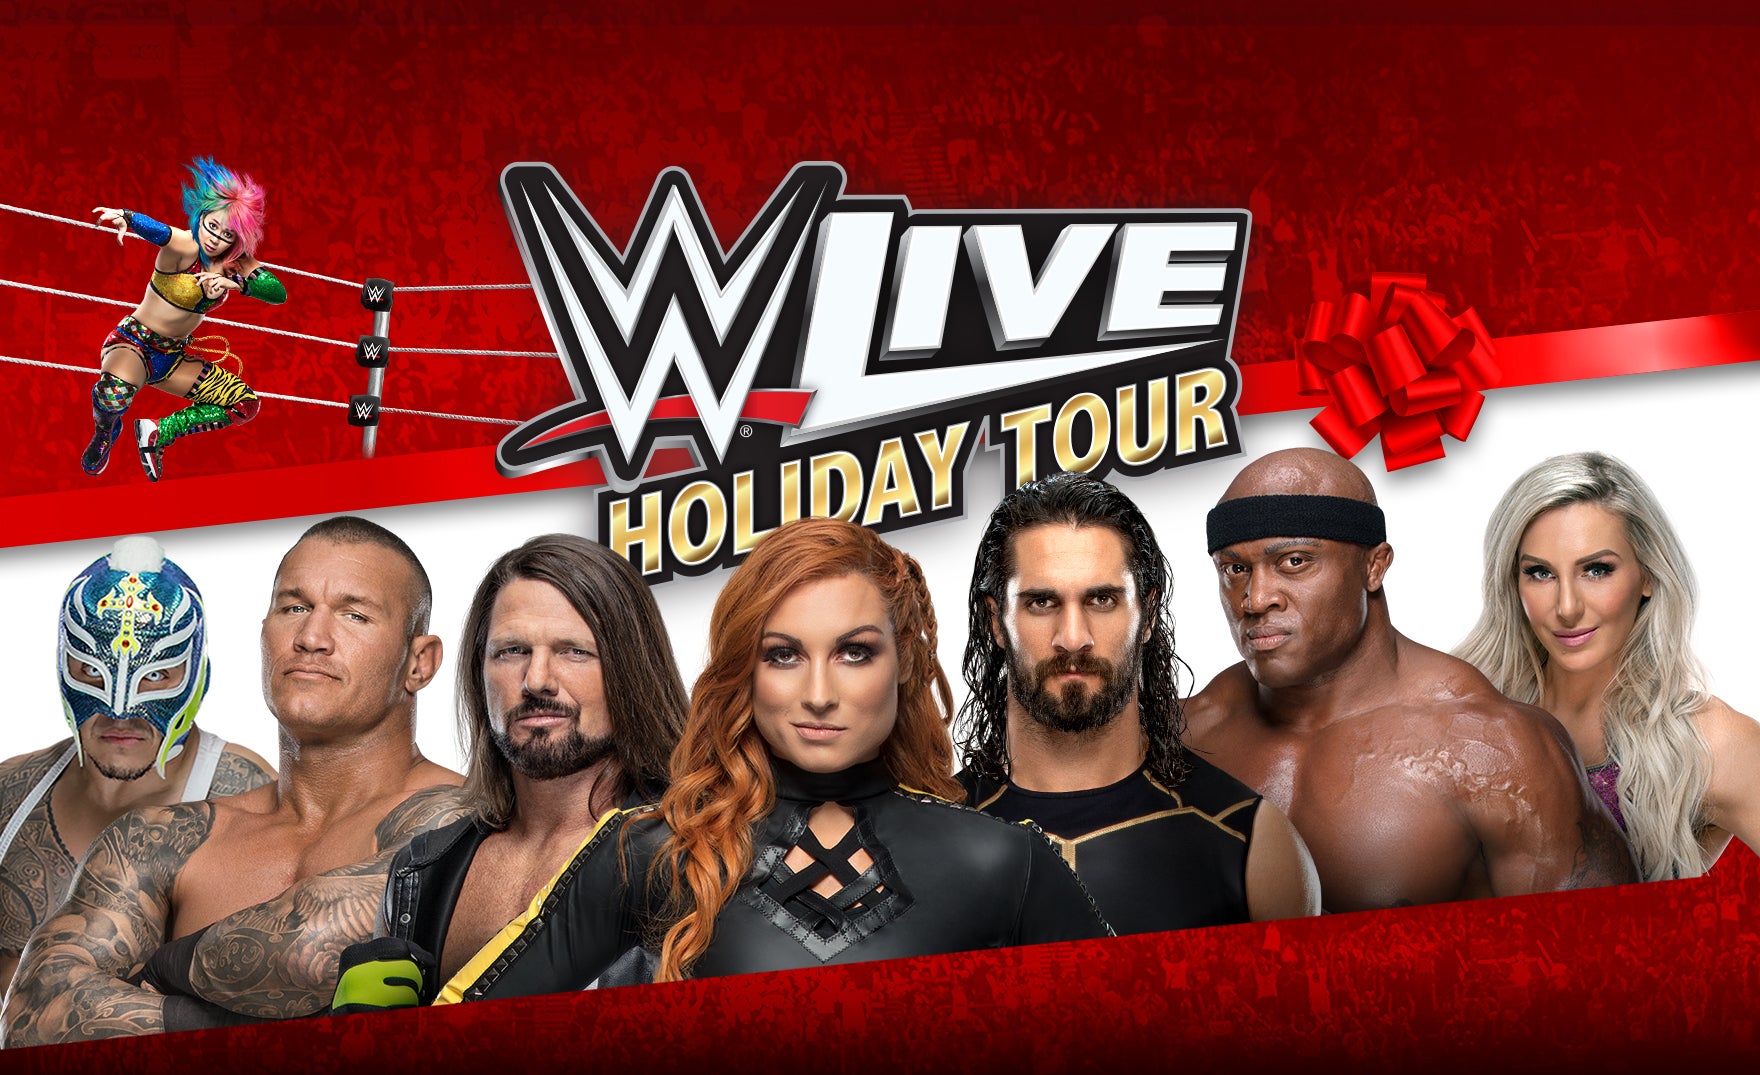 WWE Live Holiday Tour 